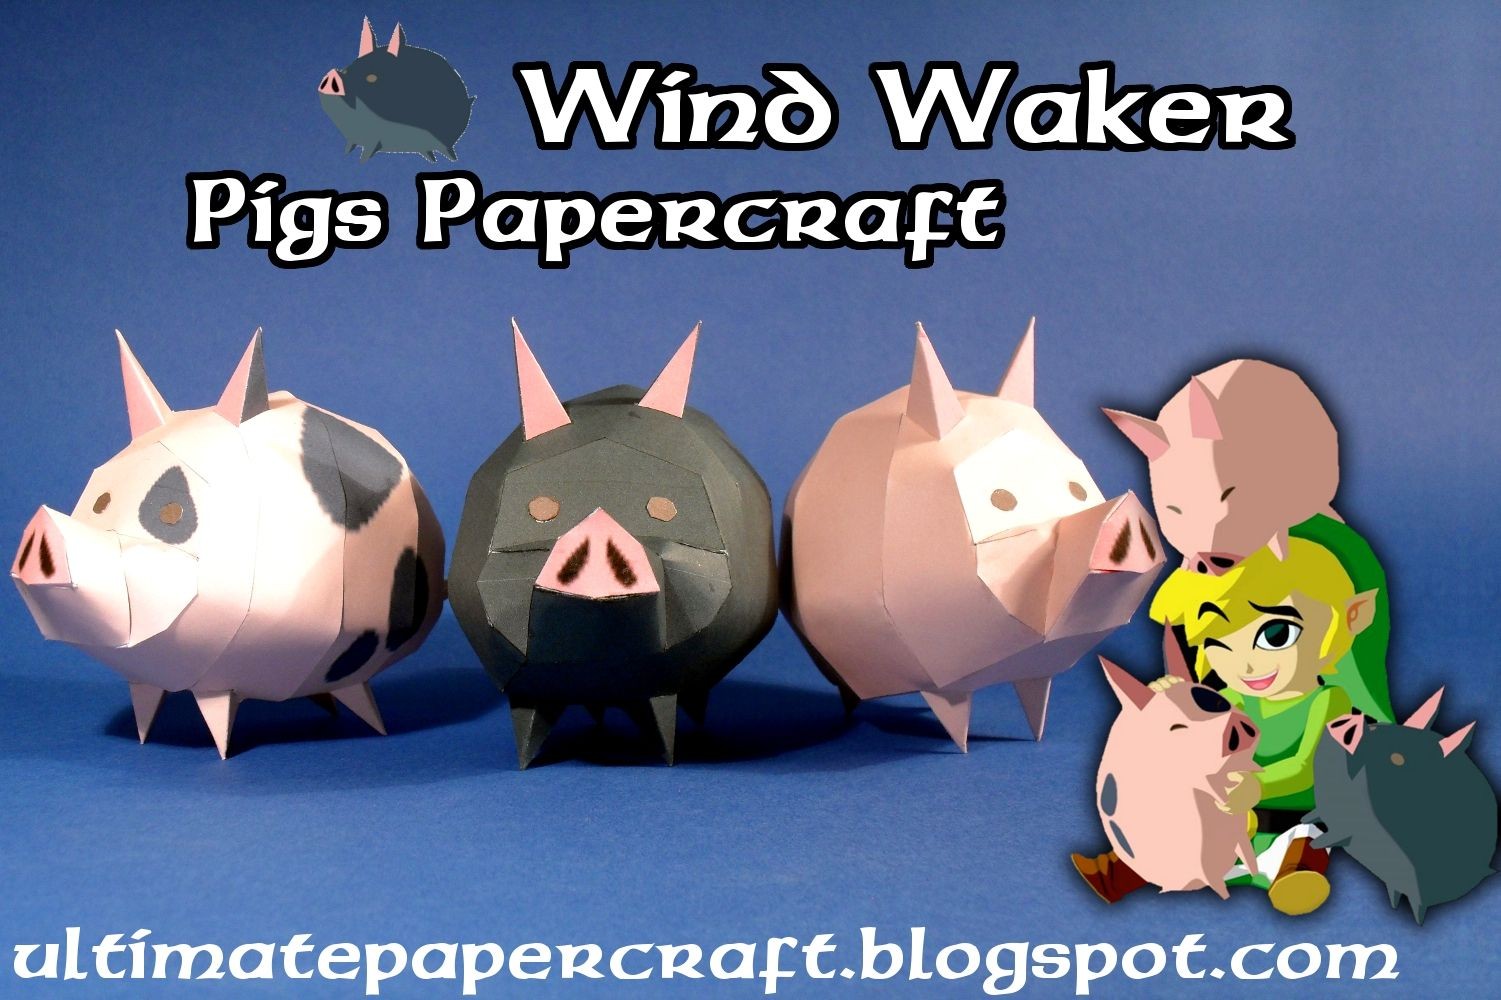 Pig Papercraft Wind Waker Pigs Ultimate Papercraft Paper Craft